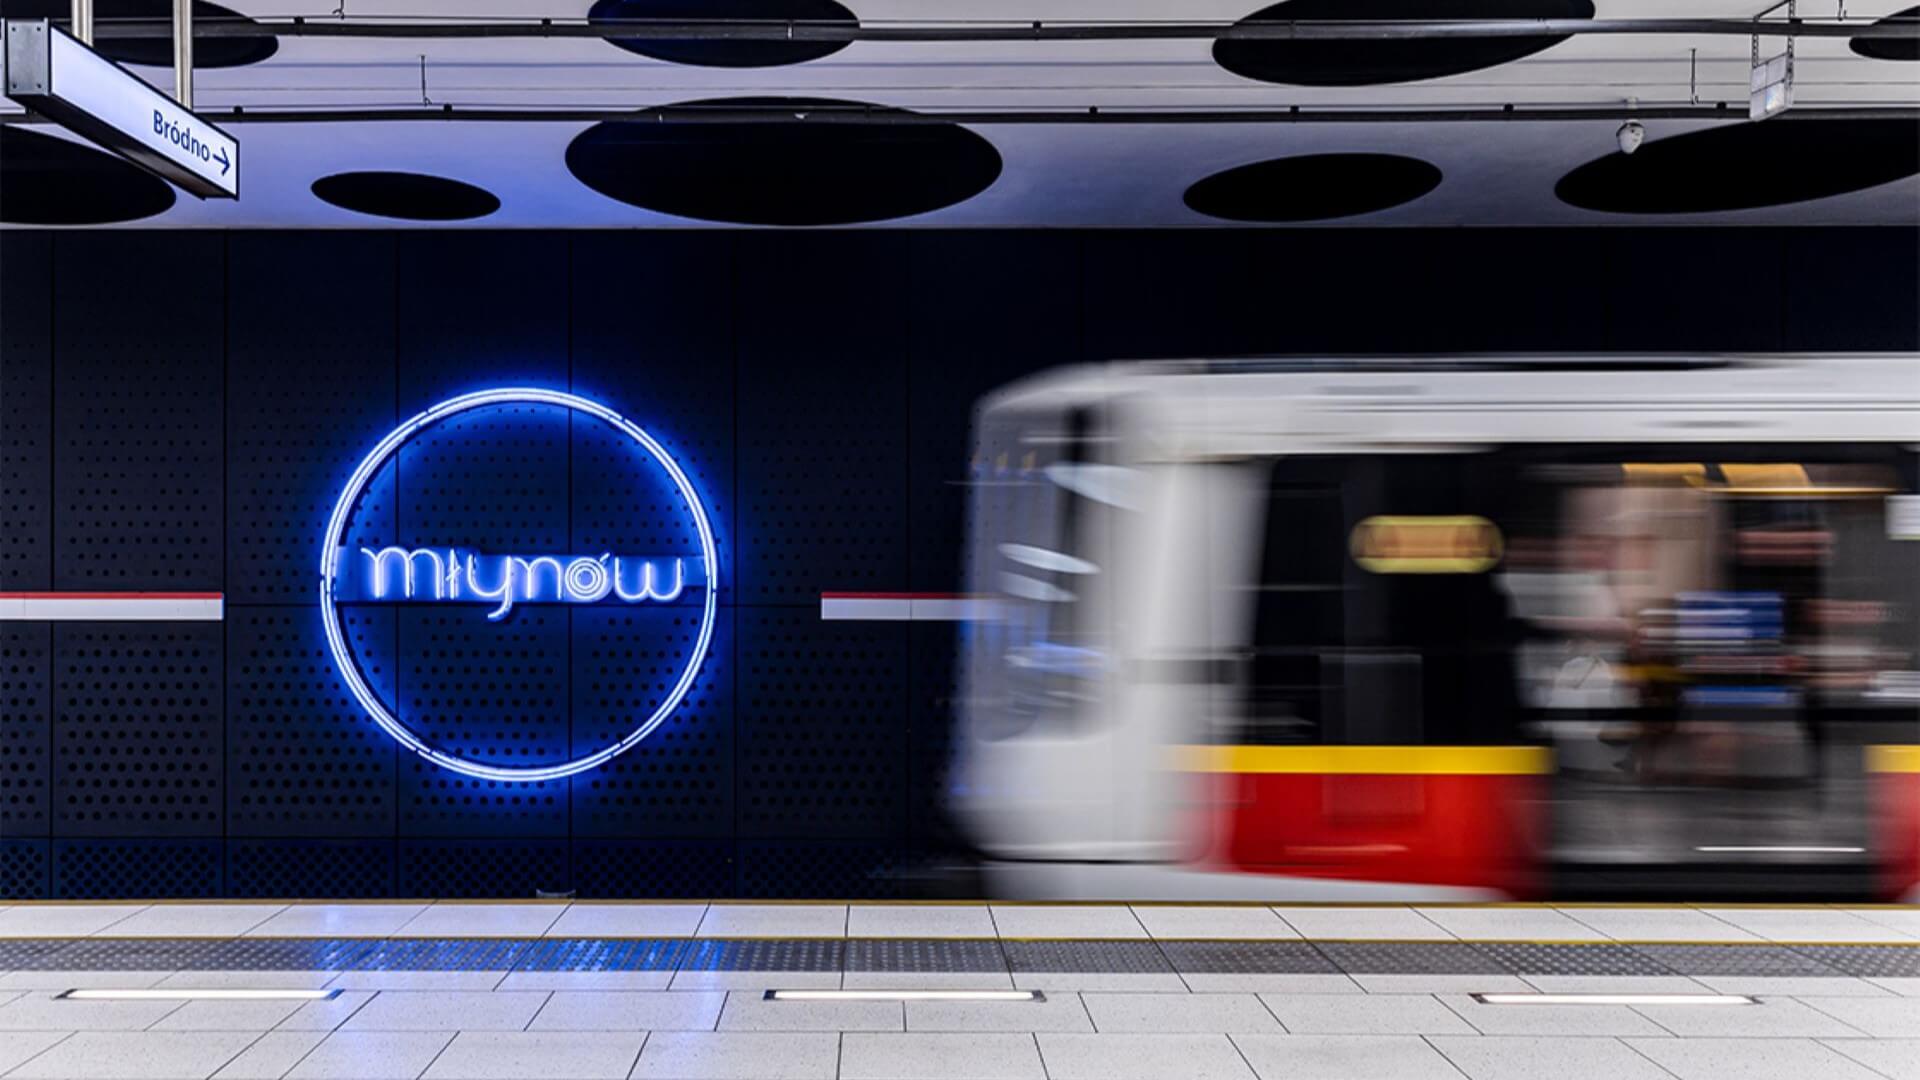 Blurred image of metro train speeding right to left along underground platform